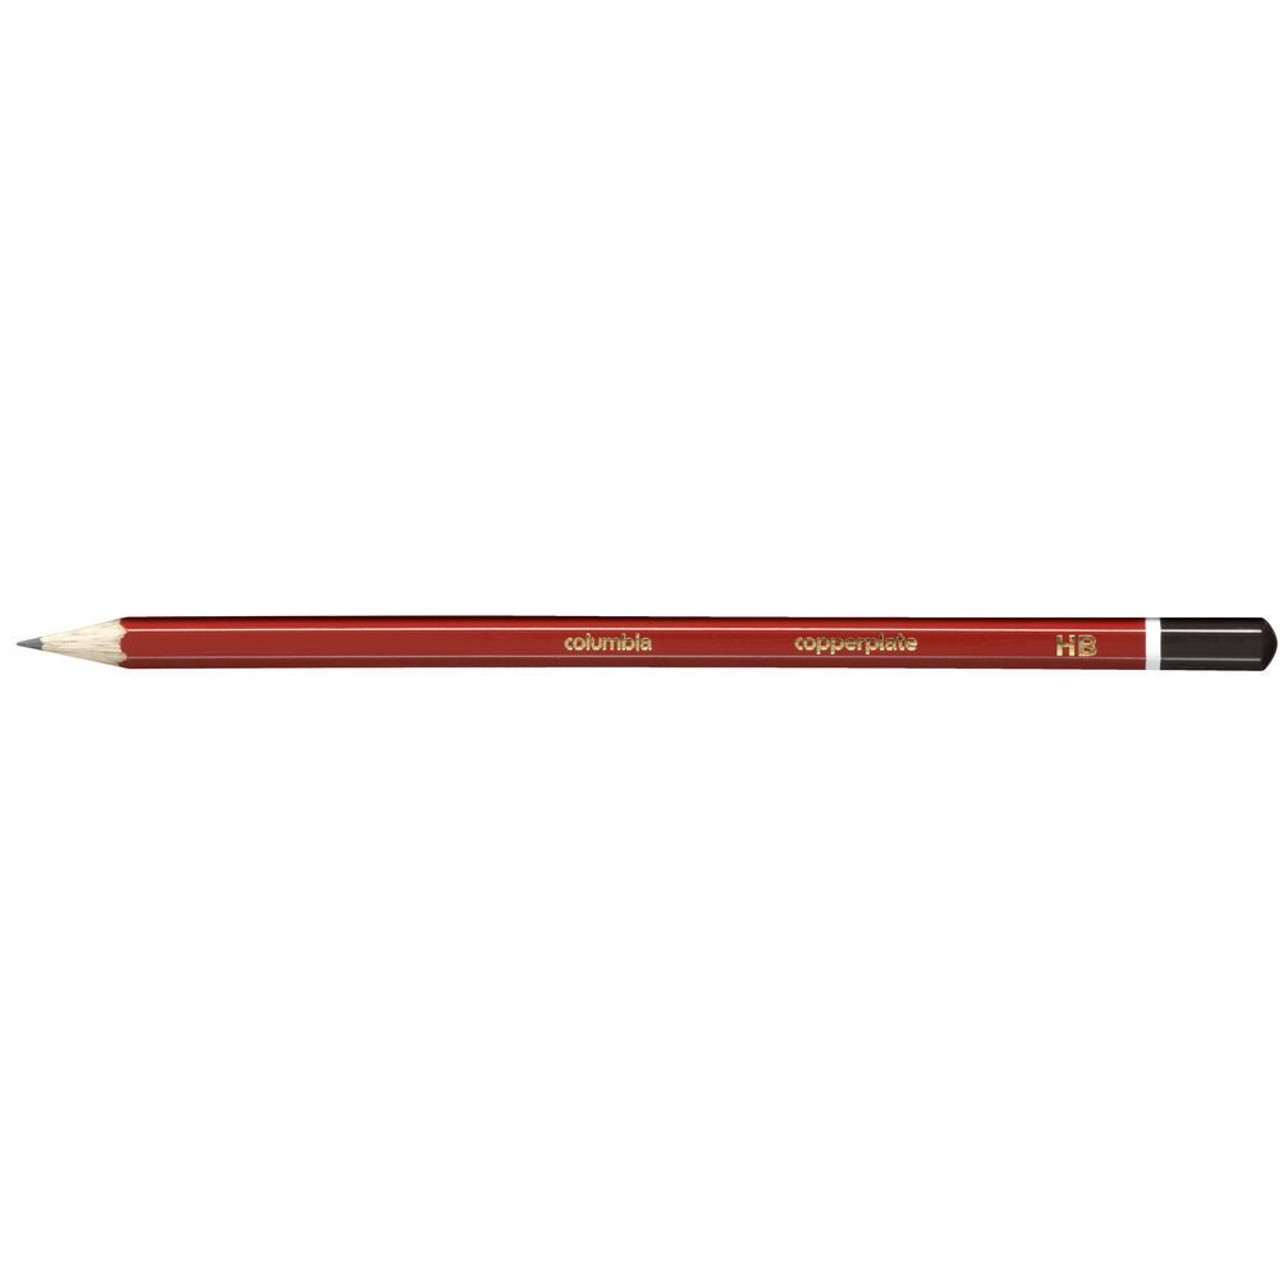 hb lead pencil